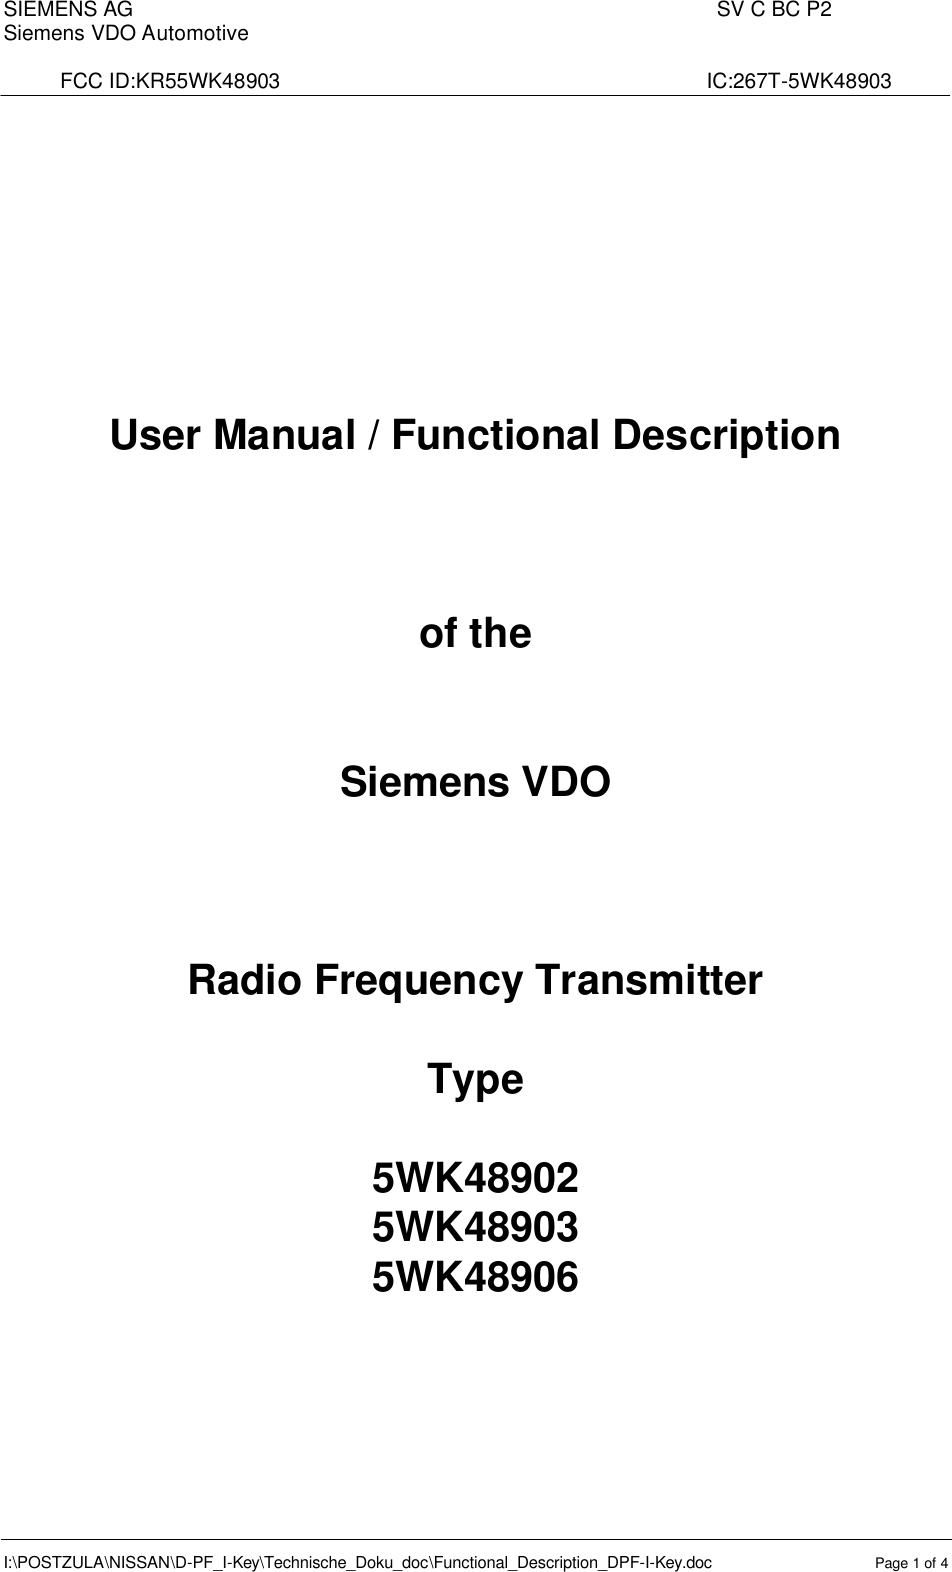 SIEMENS AG                                                                                                  SV C BC P2   Siemens VDO Automotive       FCC ID:KR55WK48903                                                                        IC:267T-5WK48903  I:\POSTZULA\NISSAN\D-PF_I-Key\Technische_Doku_doc\Functional_Description_DPF-I-Key.doc Page 1 of 4         User Manual / Functional Description    of the   Siemens VDO    Radio Frequency Transmitter  Type  5WK48902 5WK48903 5WK48906        